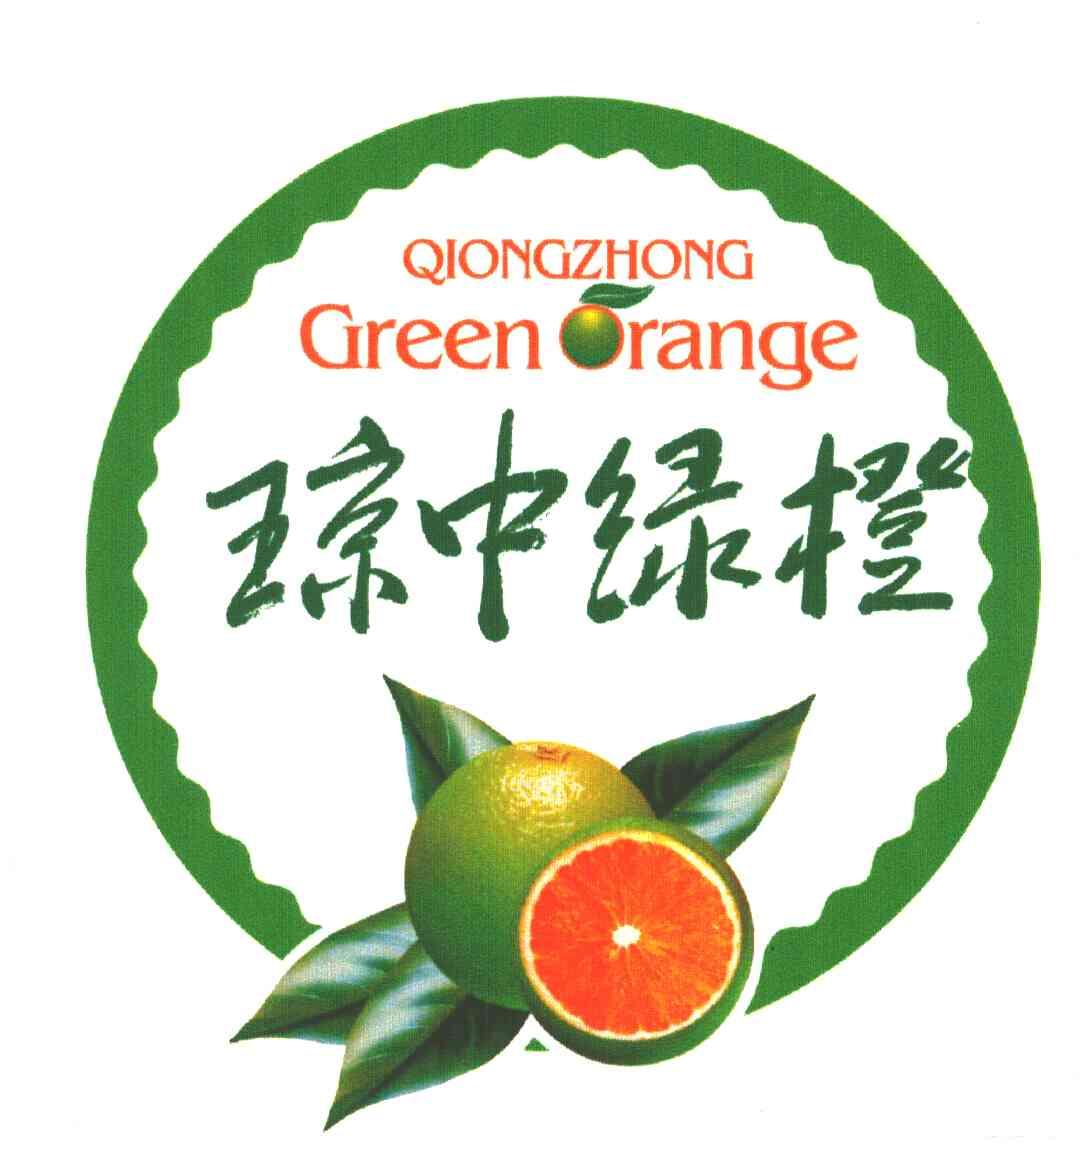 琼中绿橙;QIONGZHONG GREEN ORANGE